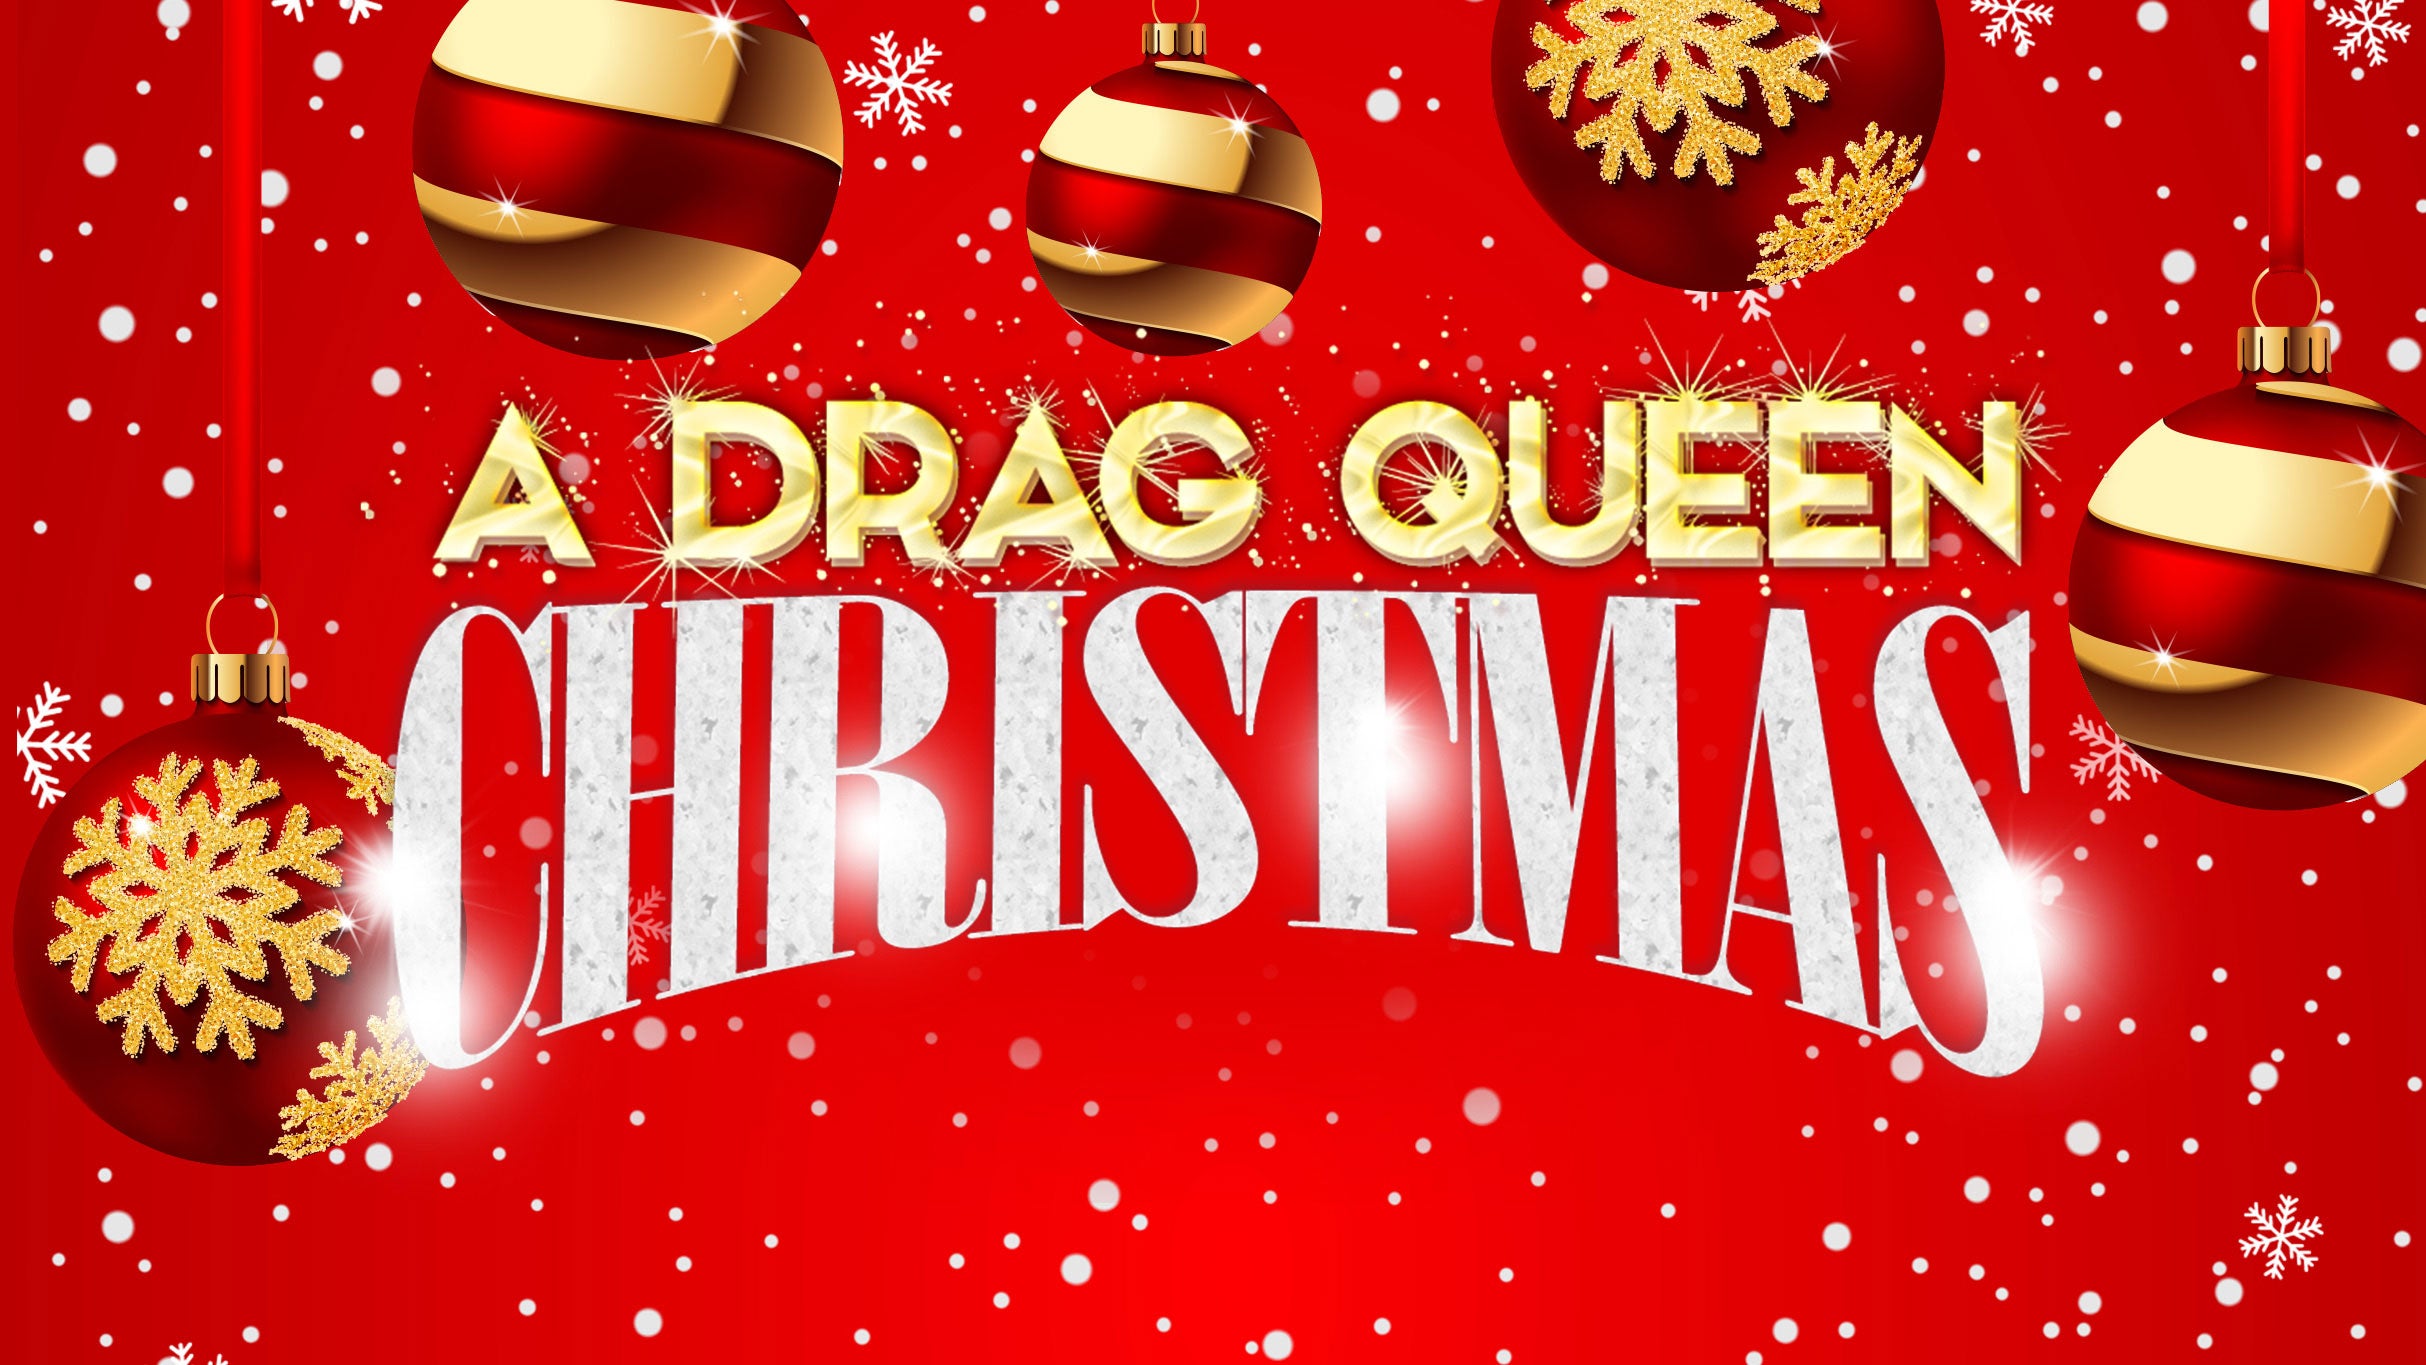 A Drag Queen Christmas free presale code